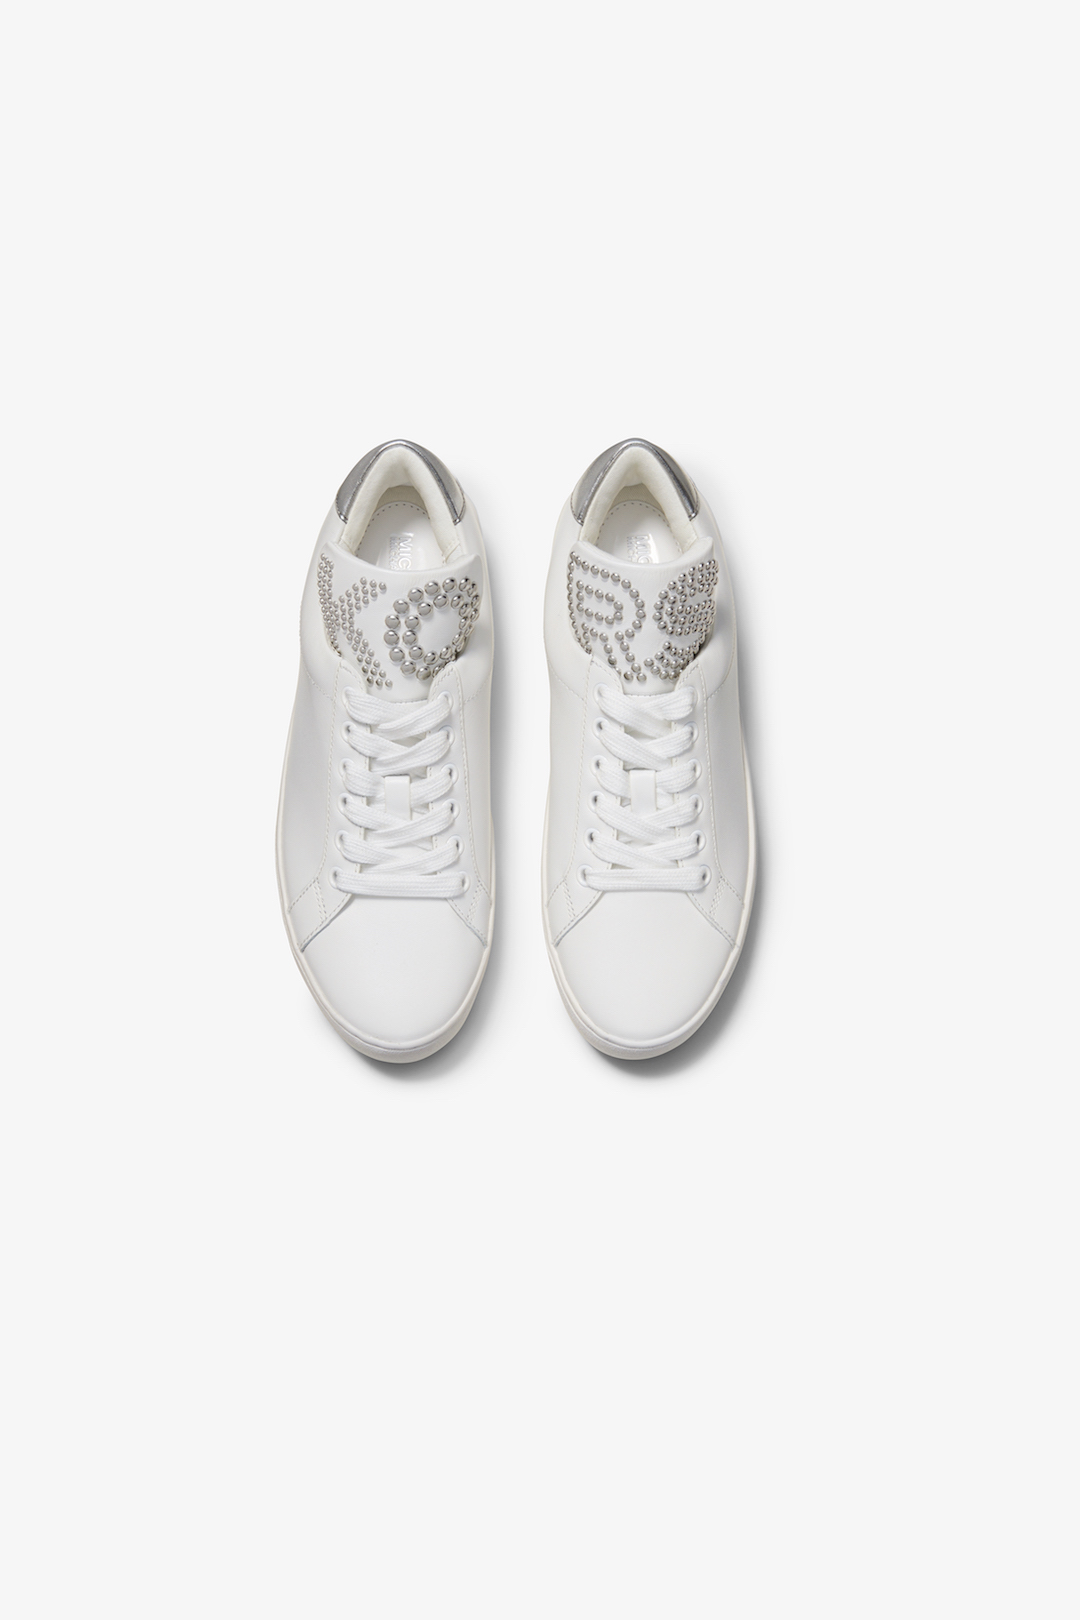 MICHAEL Michael Kors White Studded Leather Mindy Sneaker.jpg